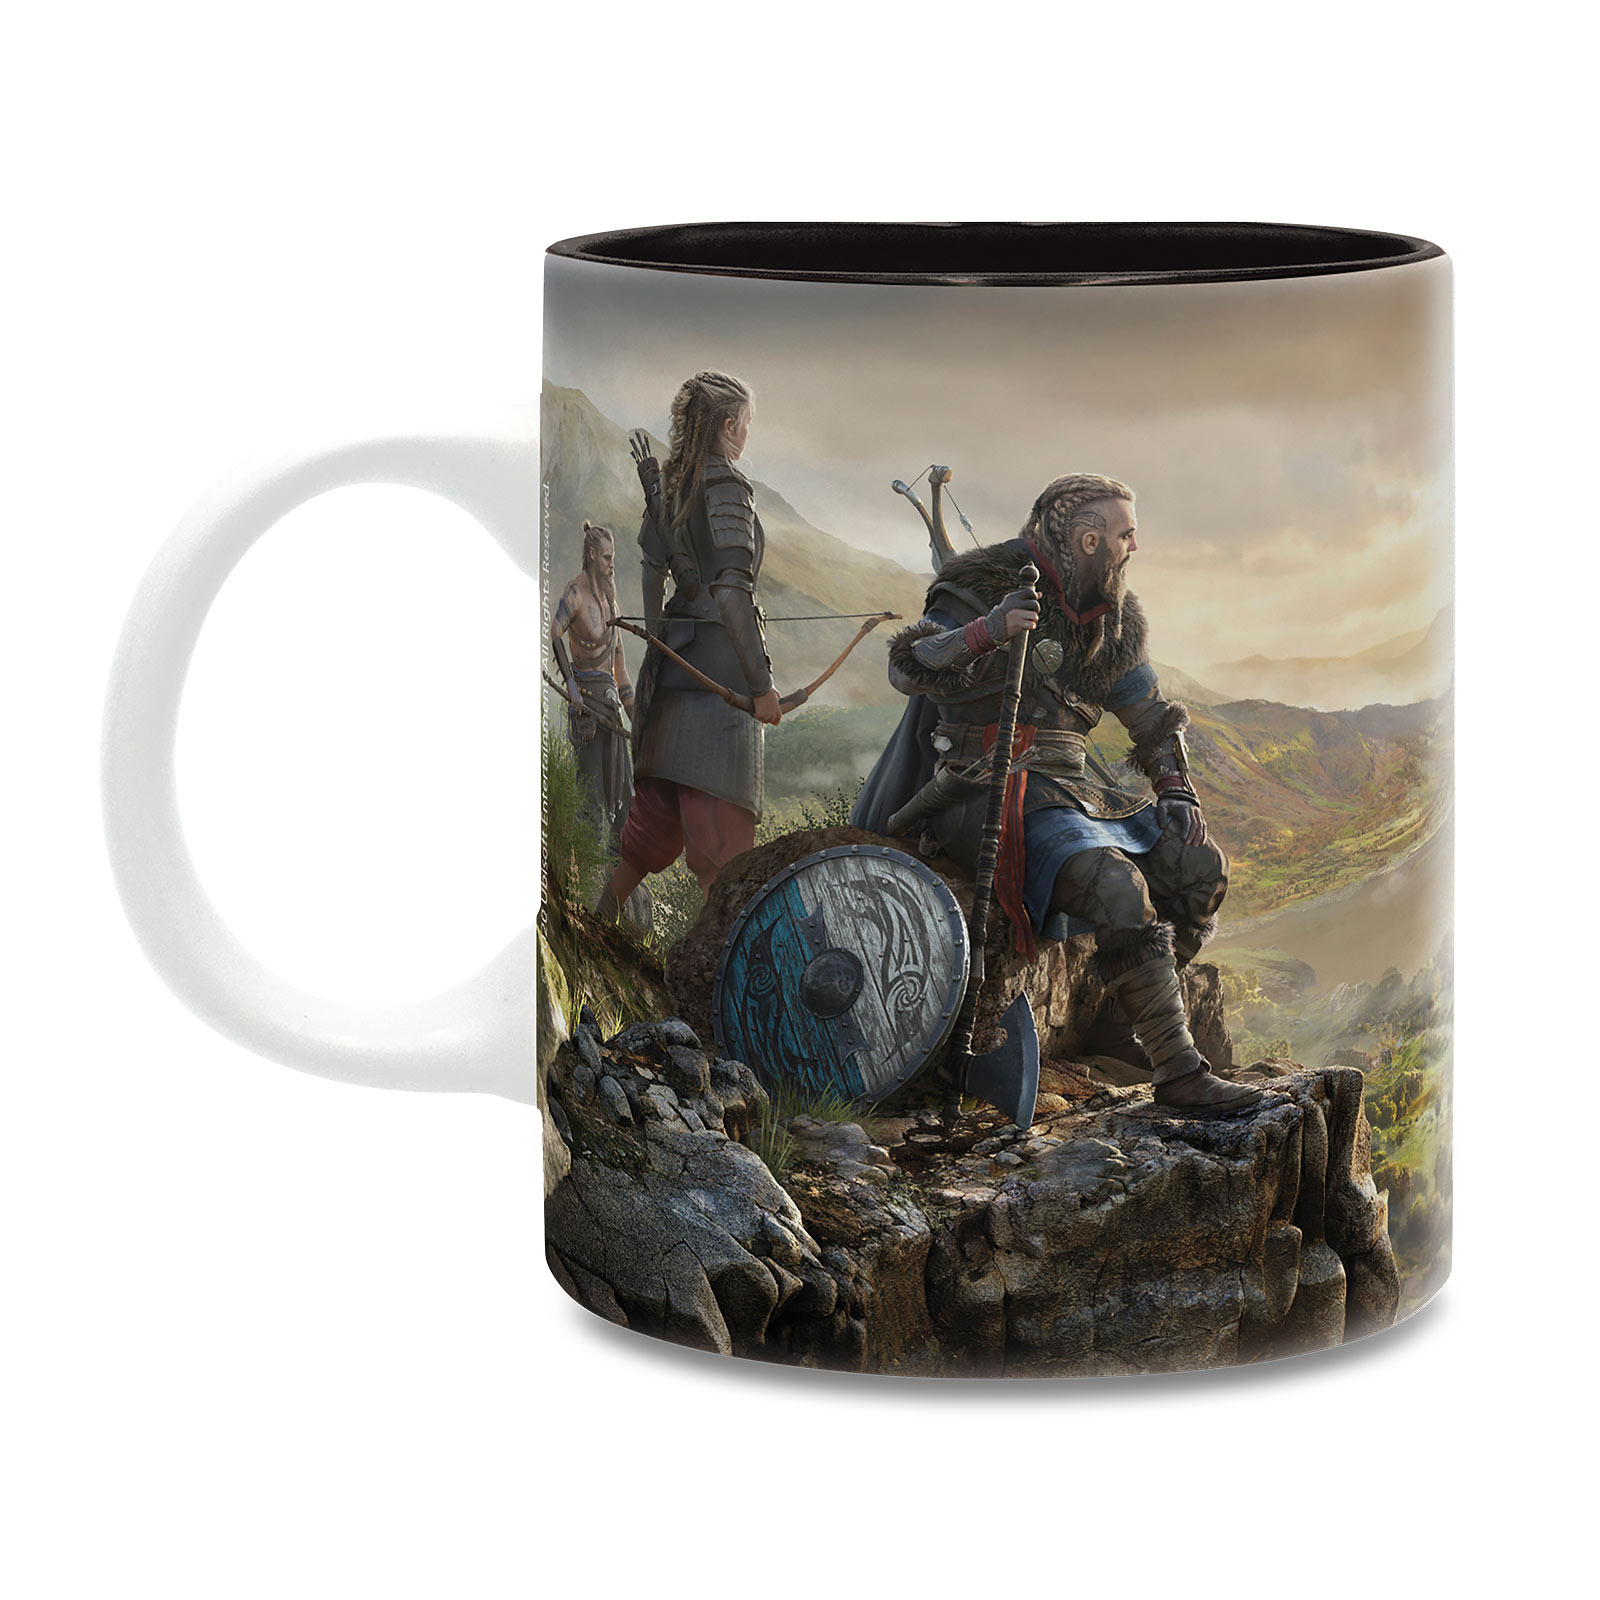 Assassin's Creed - Valhalla Landscape Mug